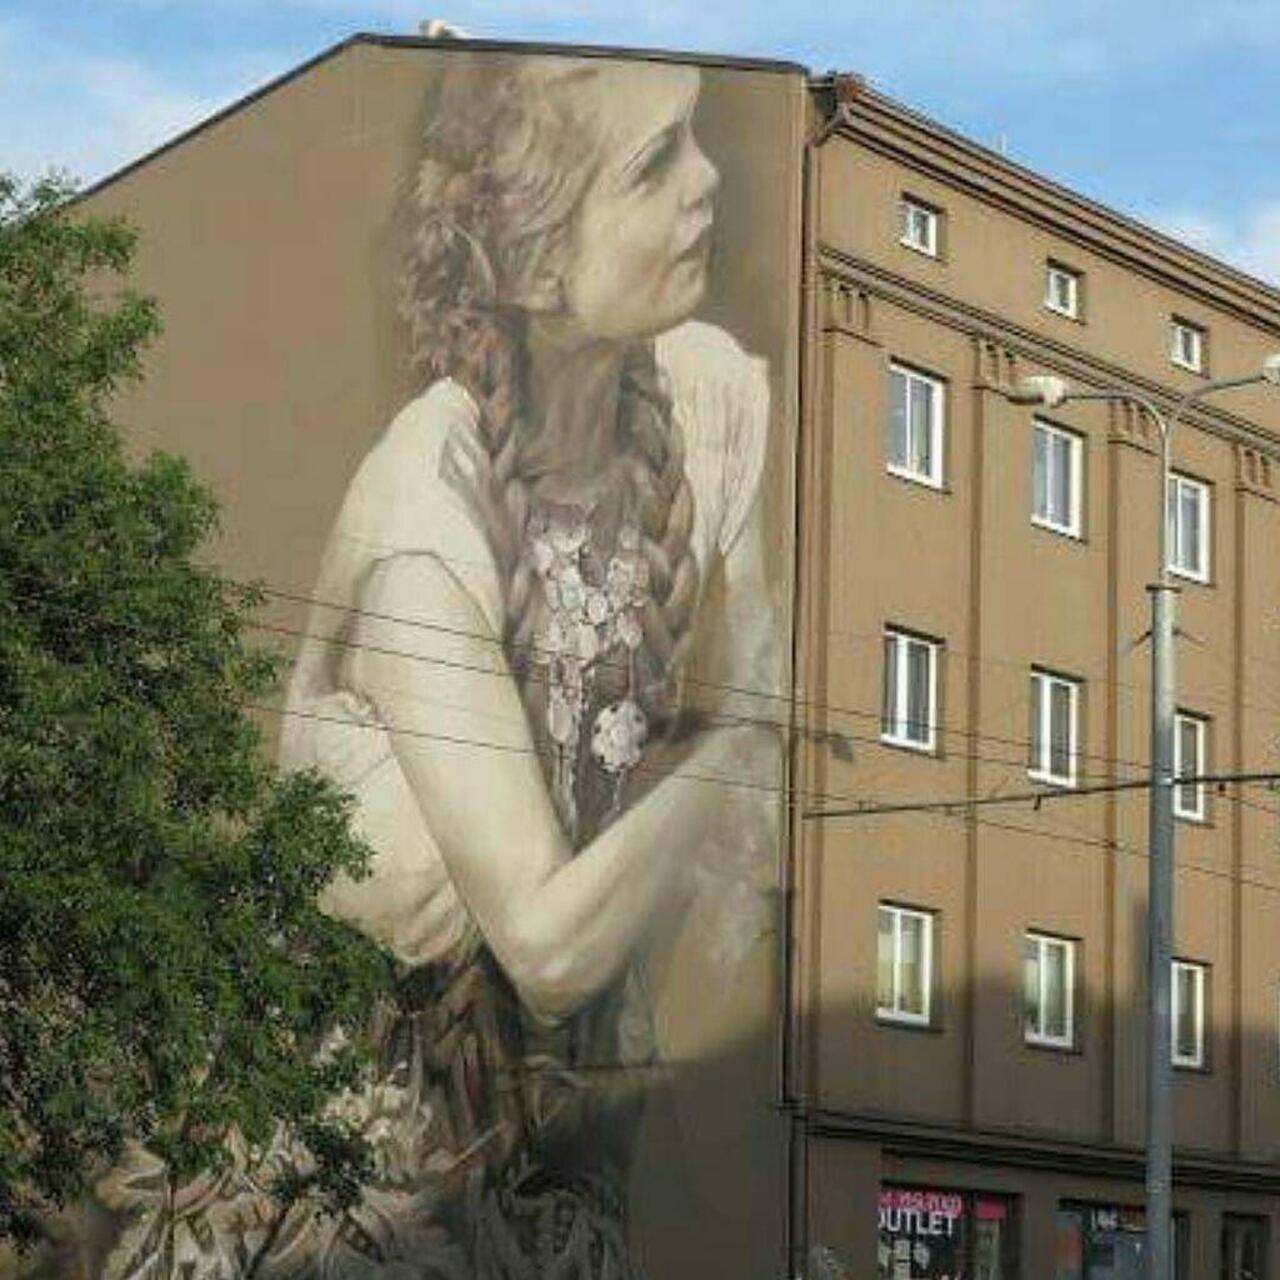 RT @artpushr: via #uffizi.graffiti "http://ift.tt/1VnEu7y" #graffiti #streetart http://t.co/hwhwiXWoAS